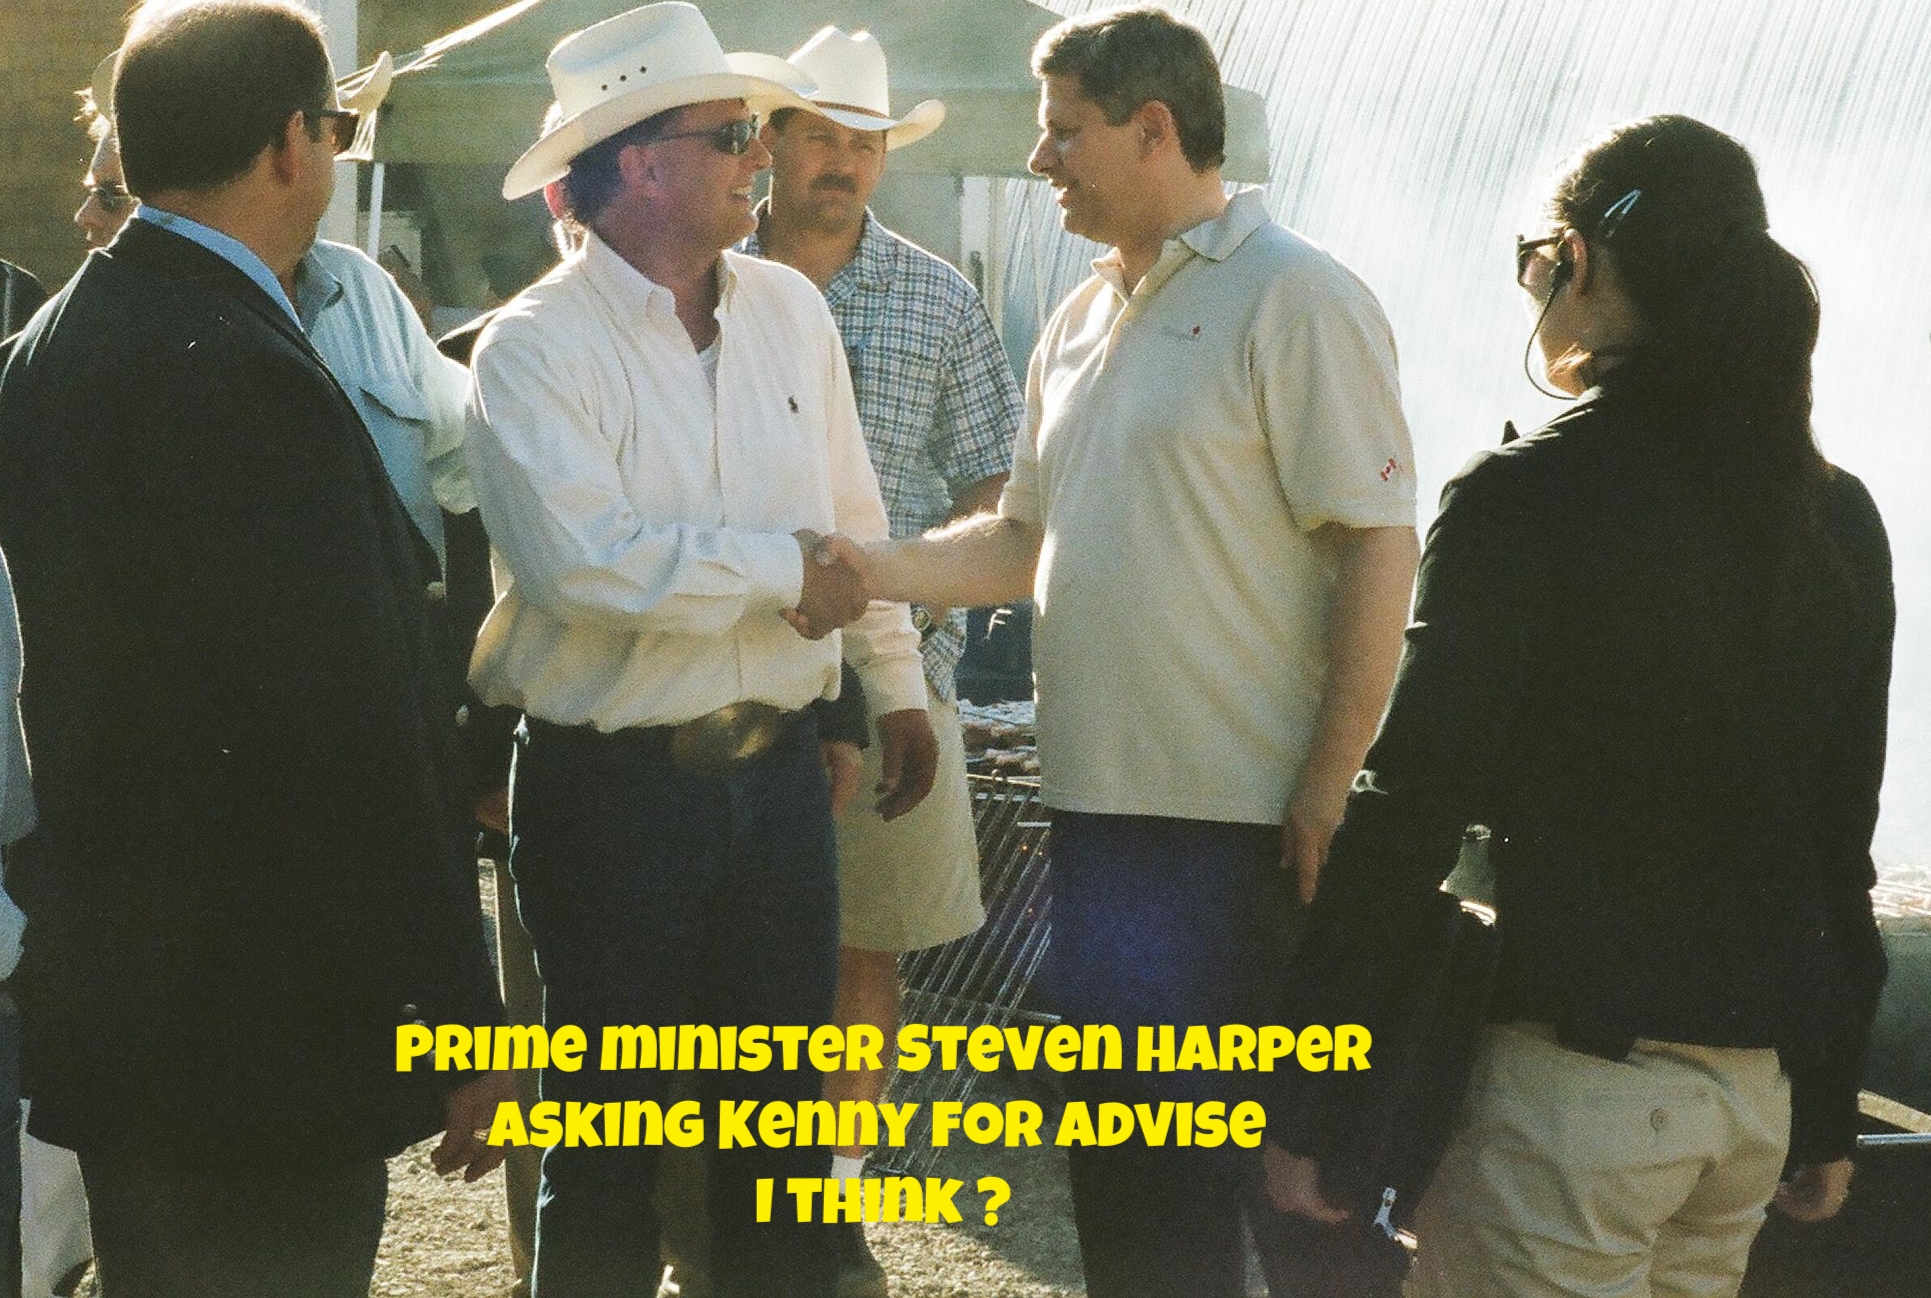  Kenny with Prime minister Steven Harper 